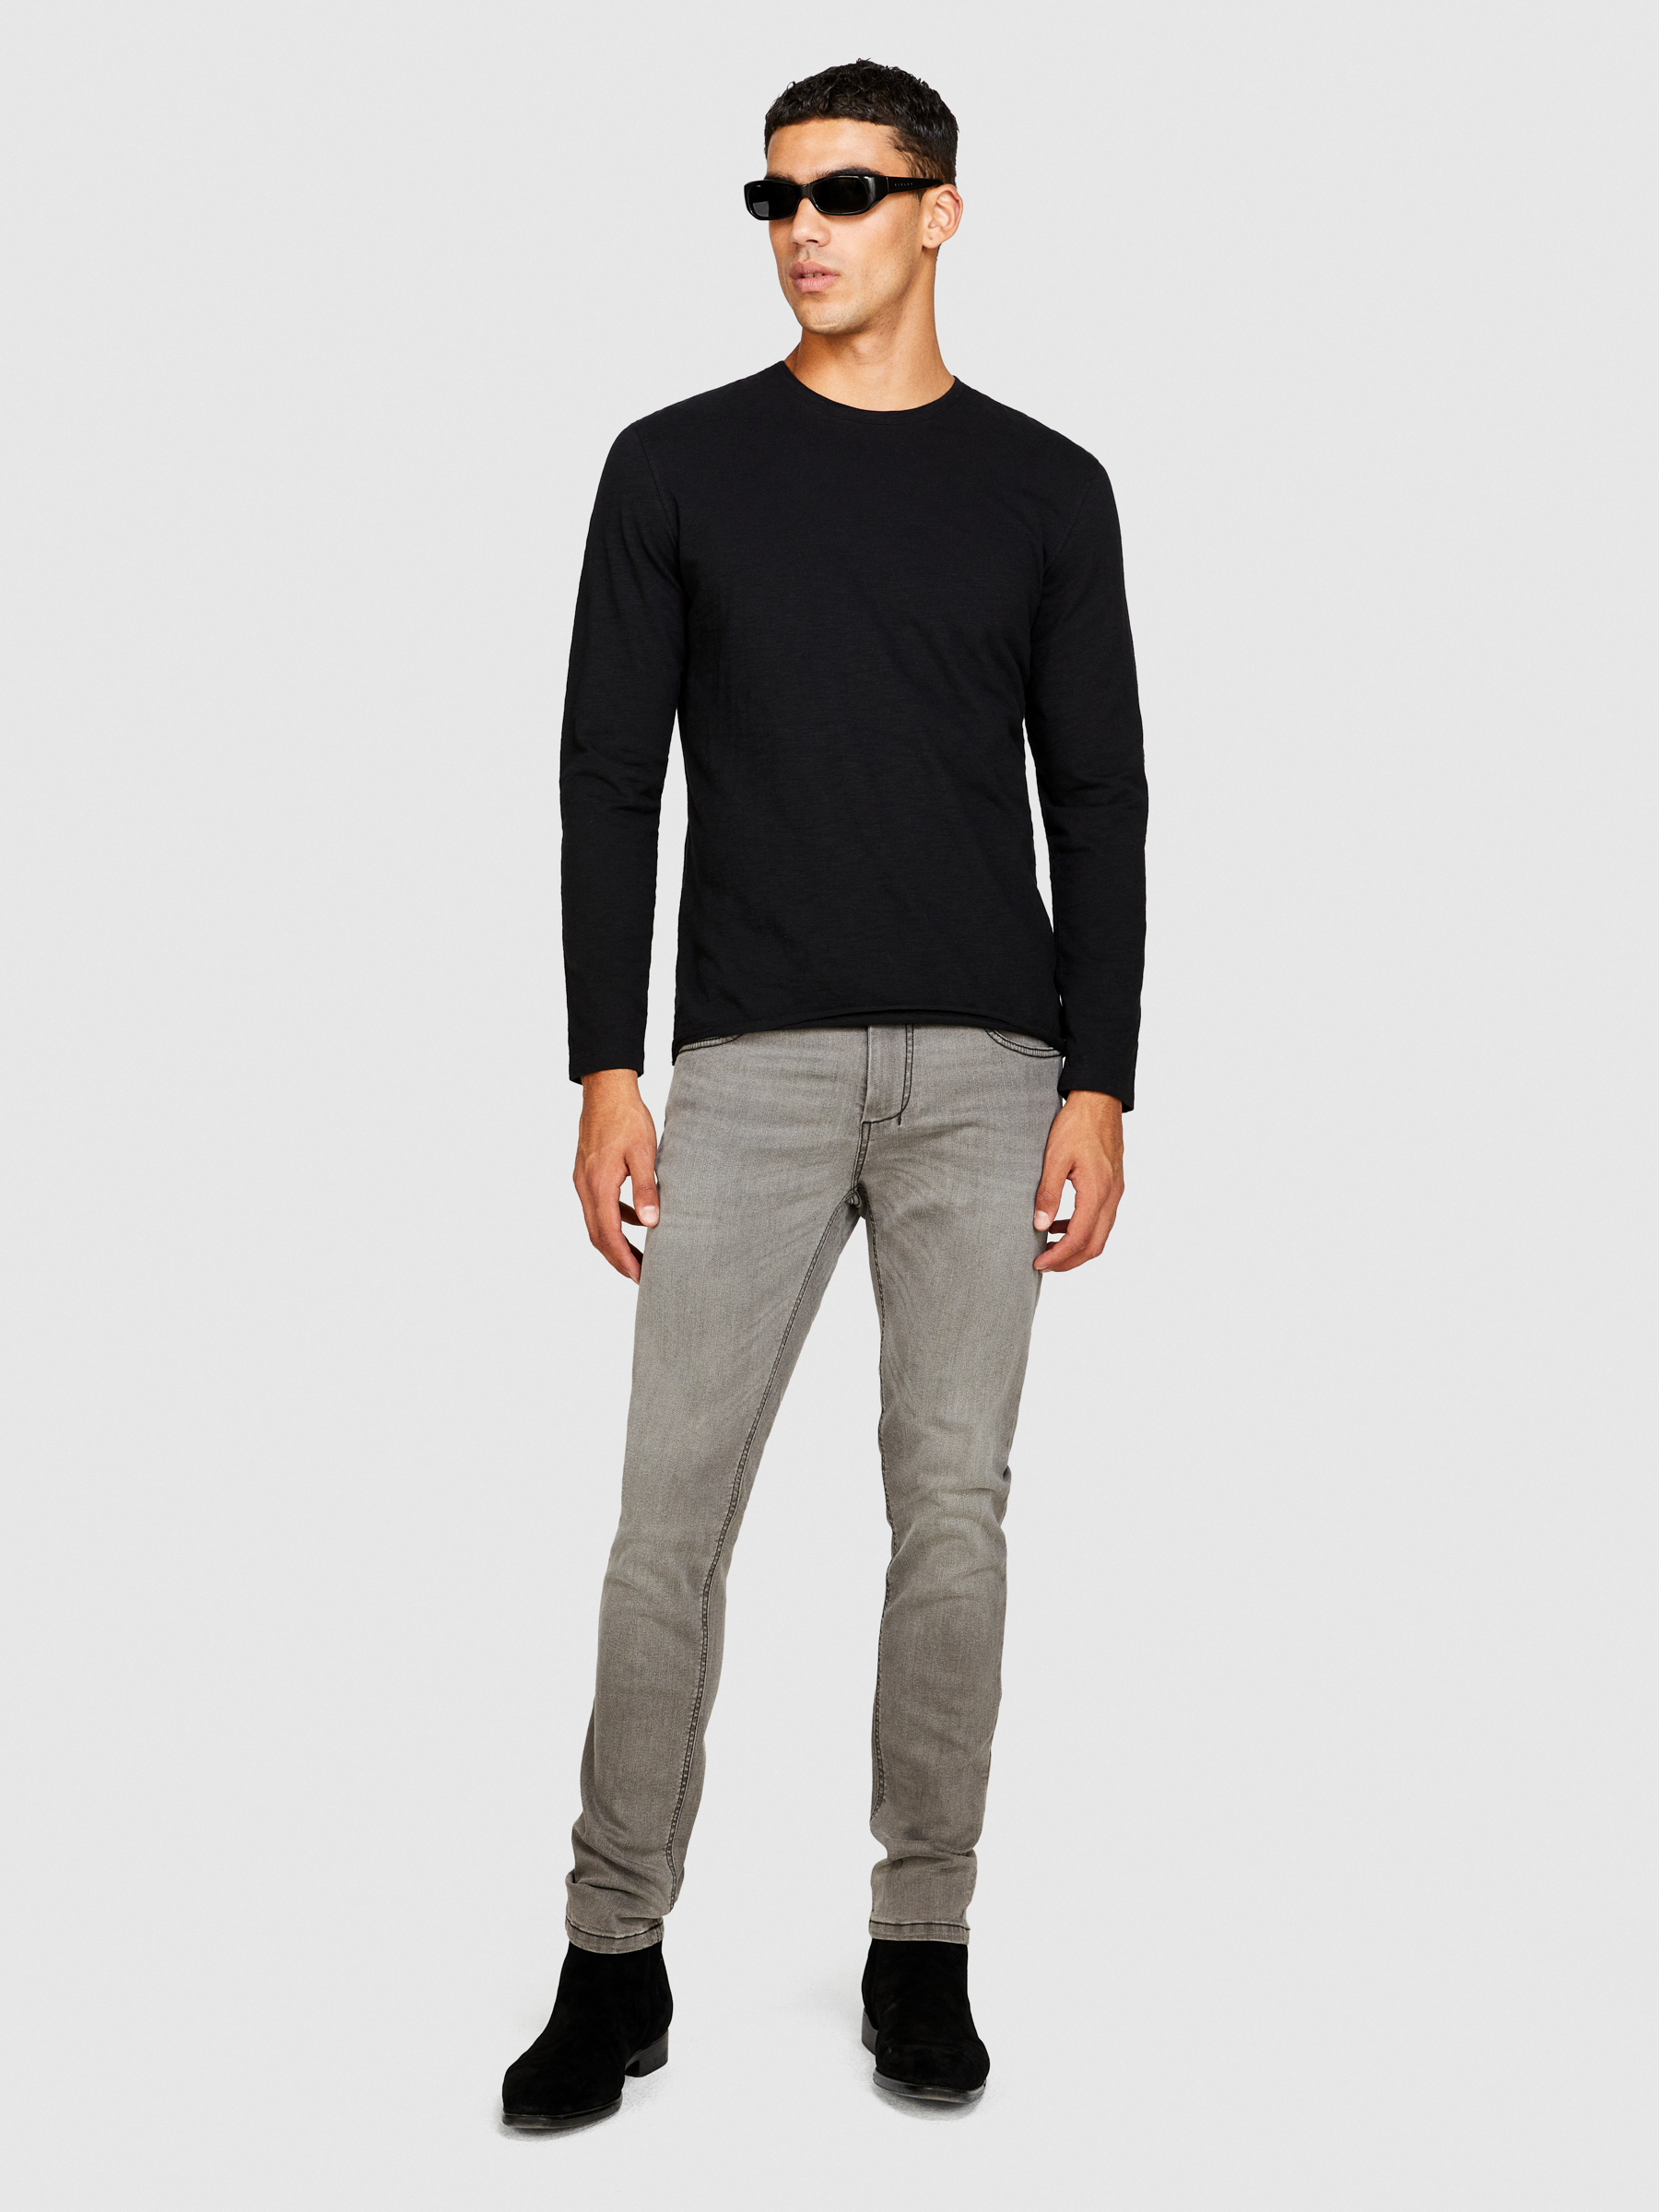 Sisley - Long Sleeve T-shirt, Man, Black, Size: L